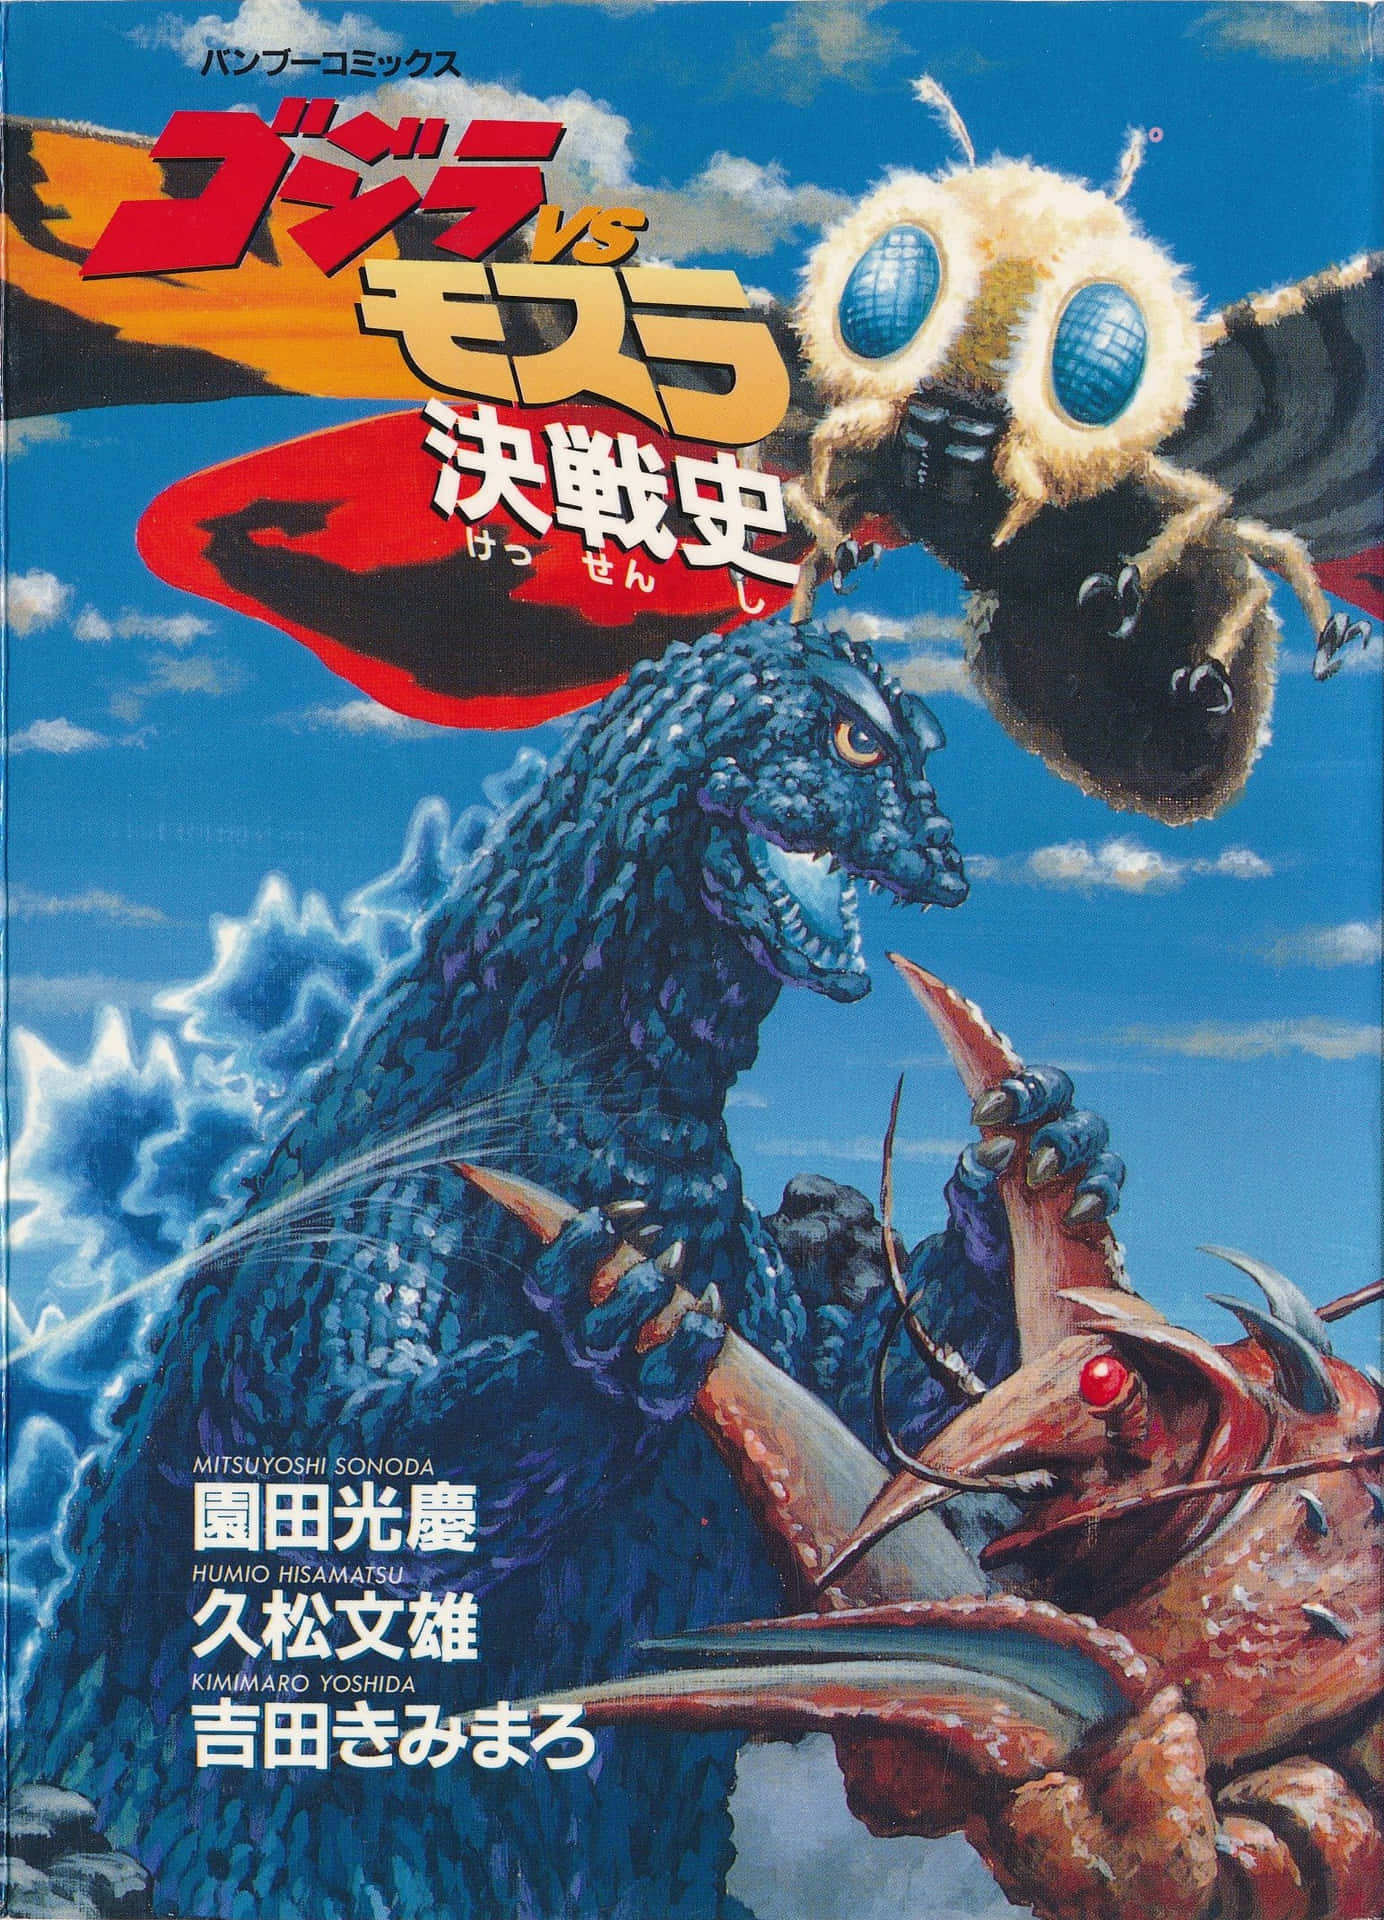 Godzilla and Mothra Face Off Wallpaper